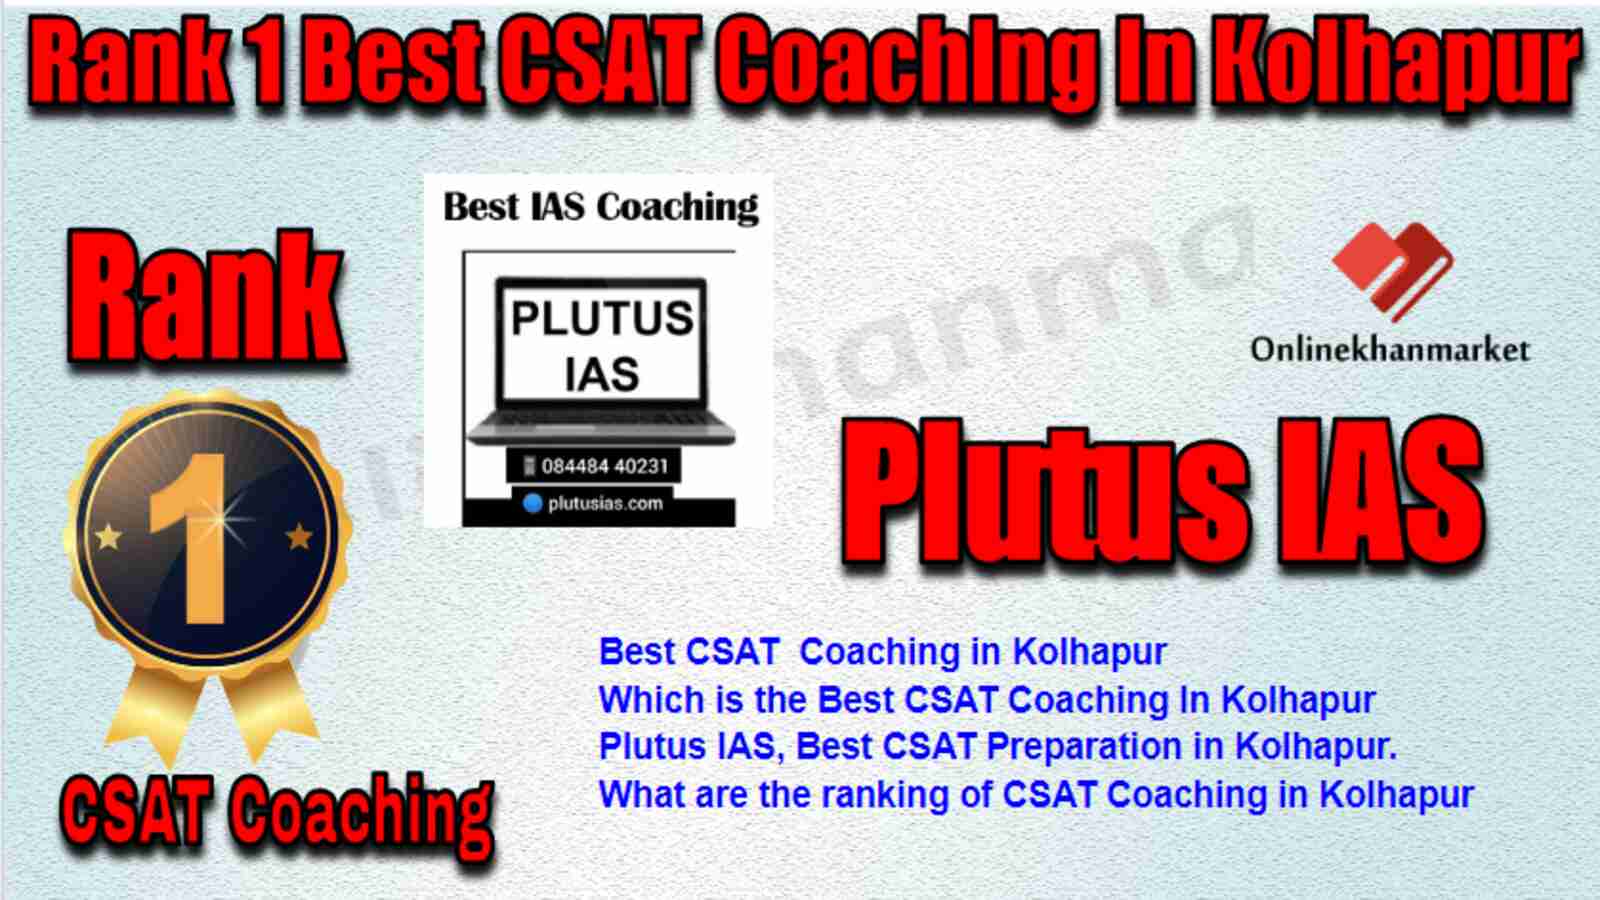 Rank 1 Best CSAT Coaching in Kolhapur